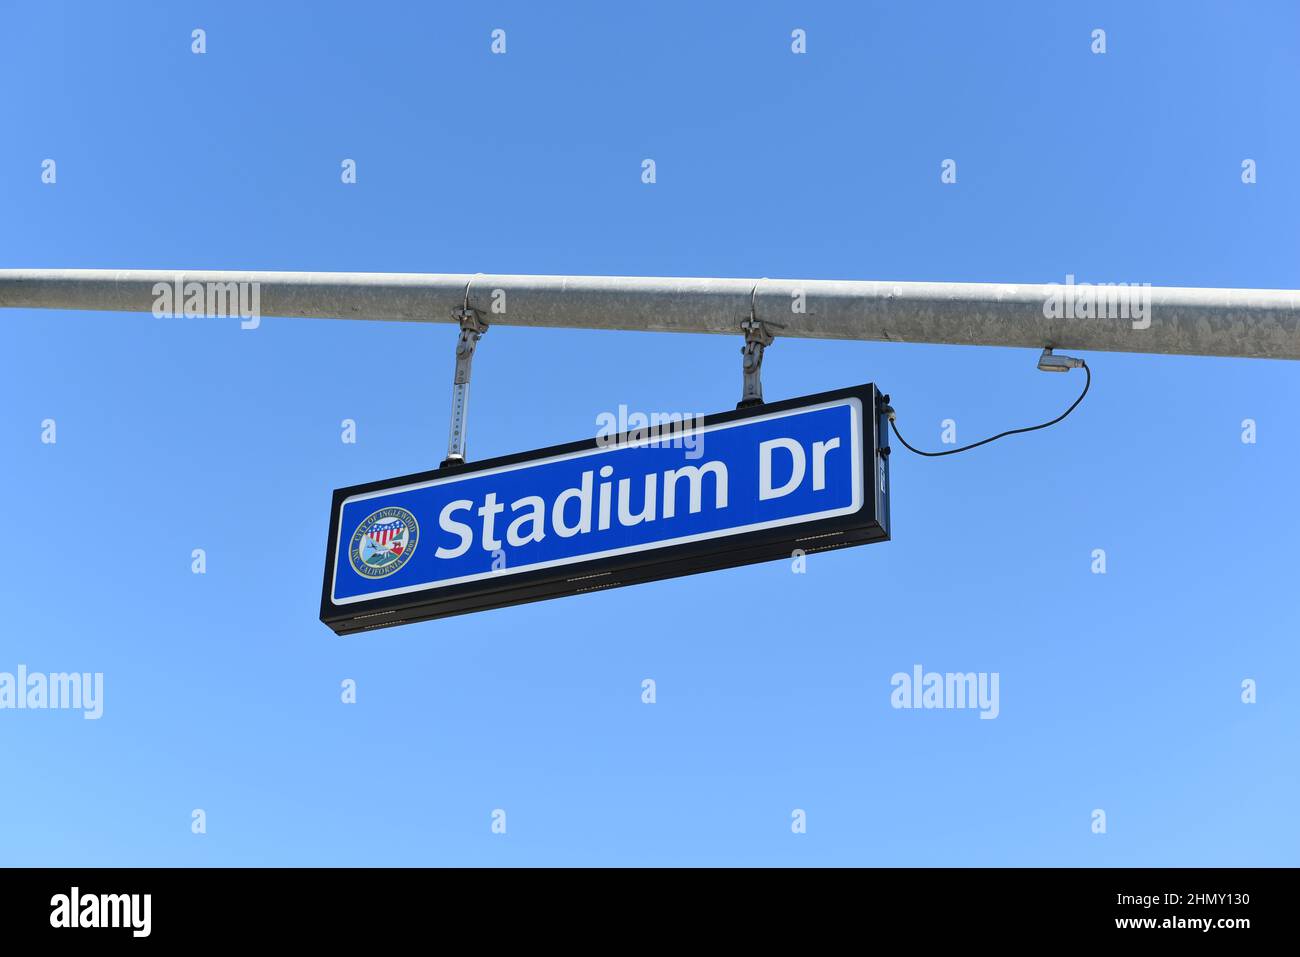 INGLEWOOD, CALIFORNIA - 12 FEB 2022: Stadium Drive street sign at the intersection of Pincay Drive at SoFi Stadium. Stock Photo